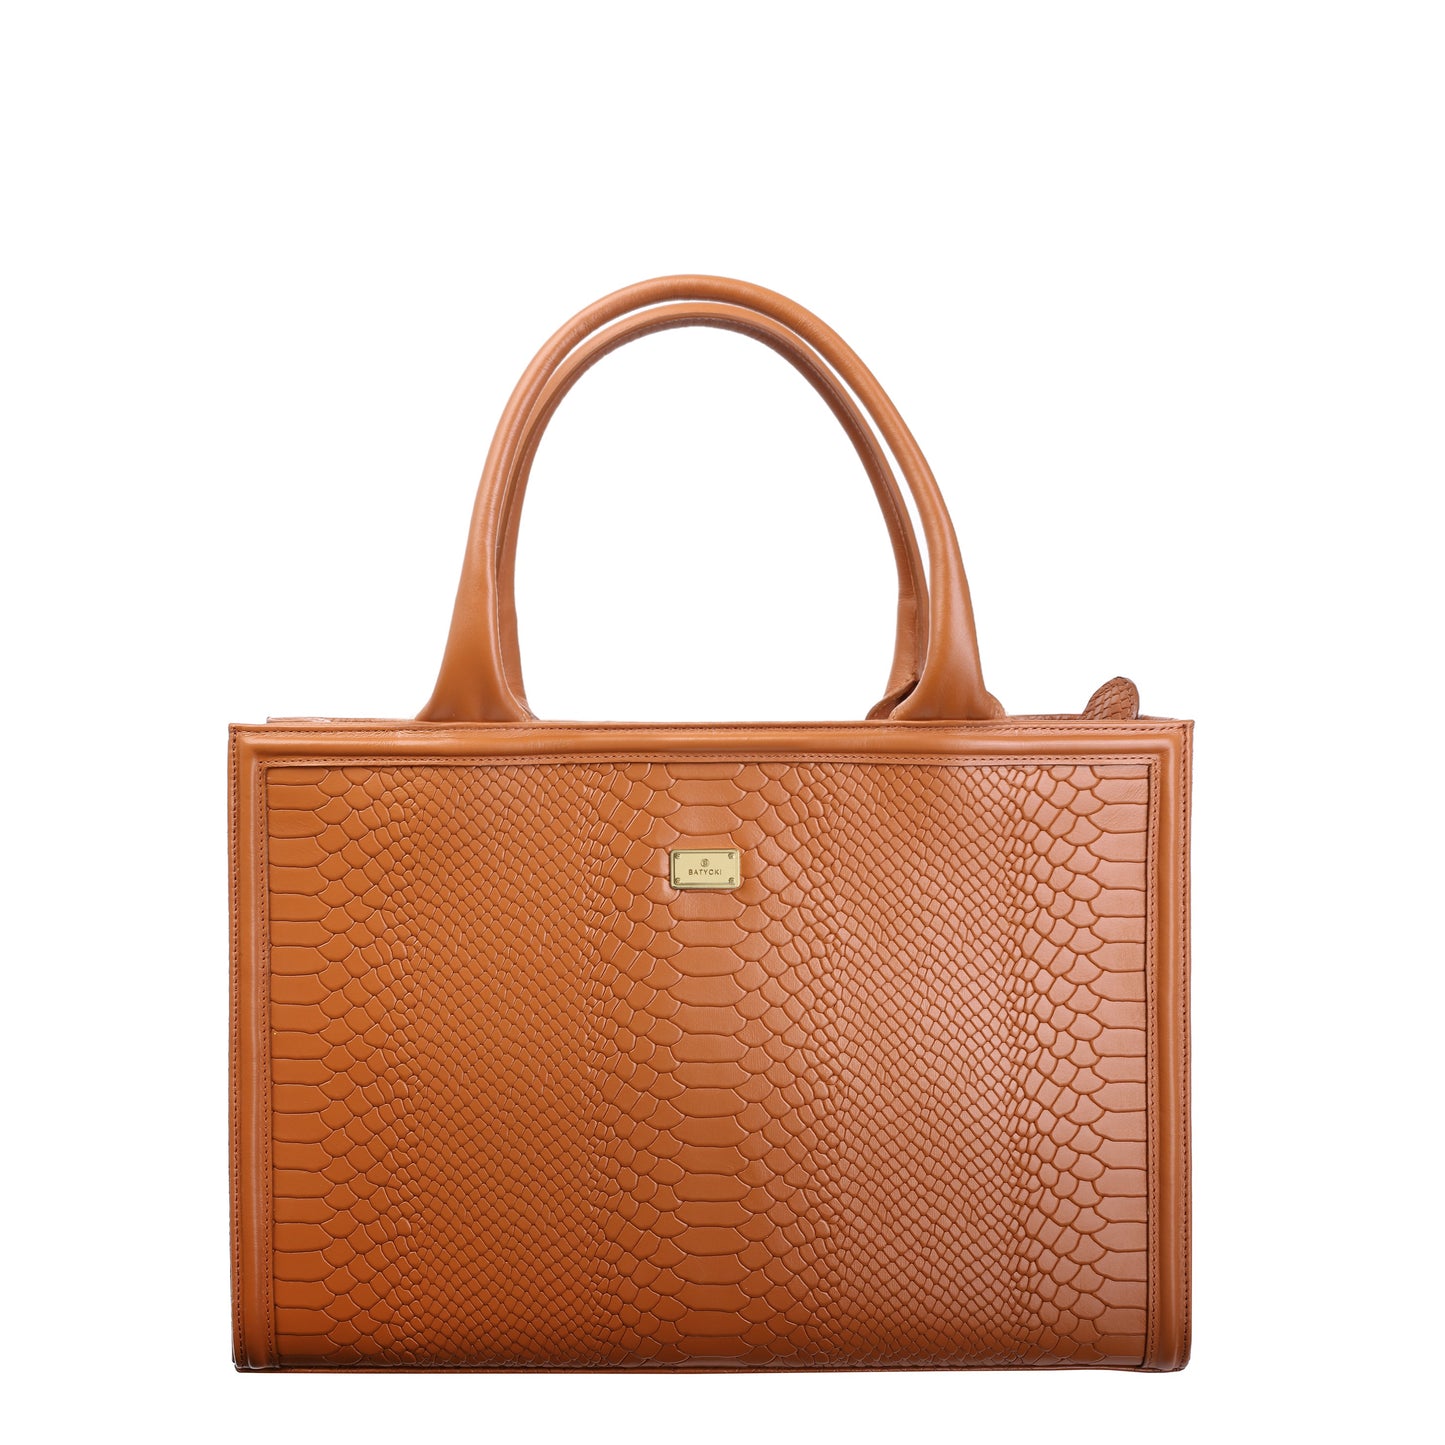 ANA COGNAC women's leather handbag